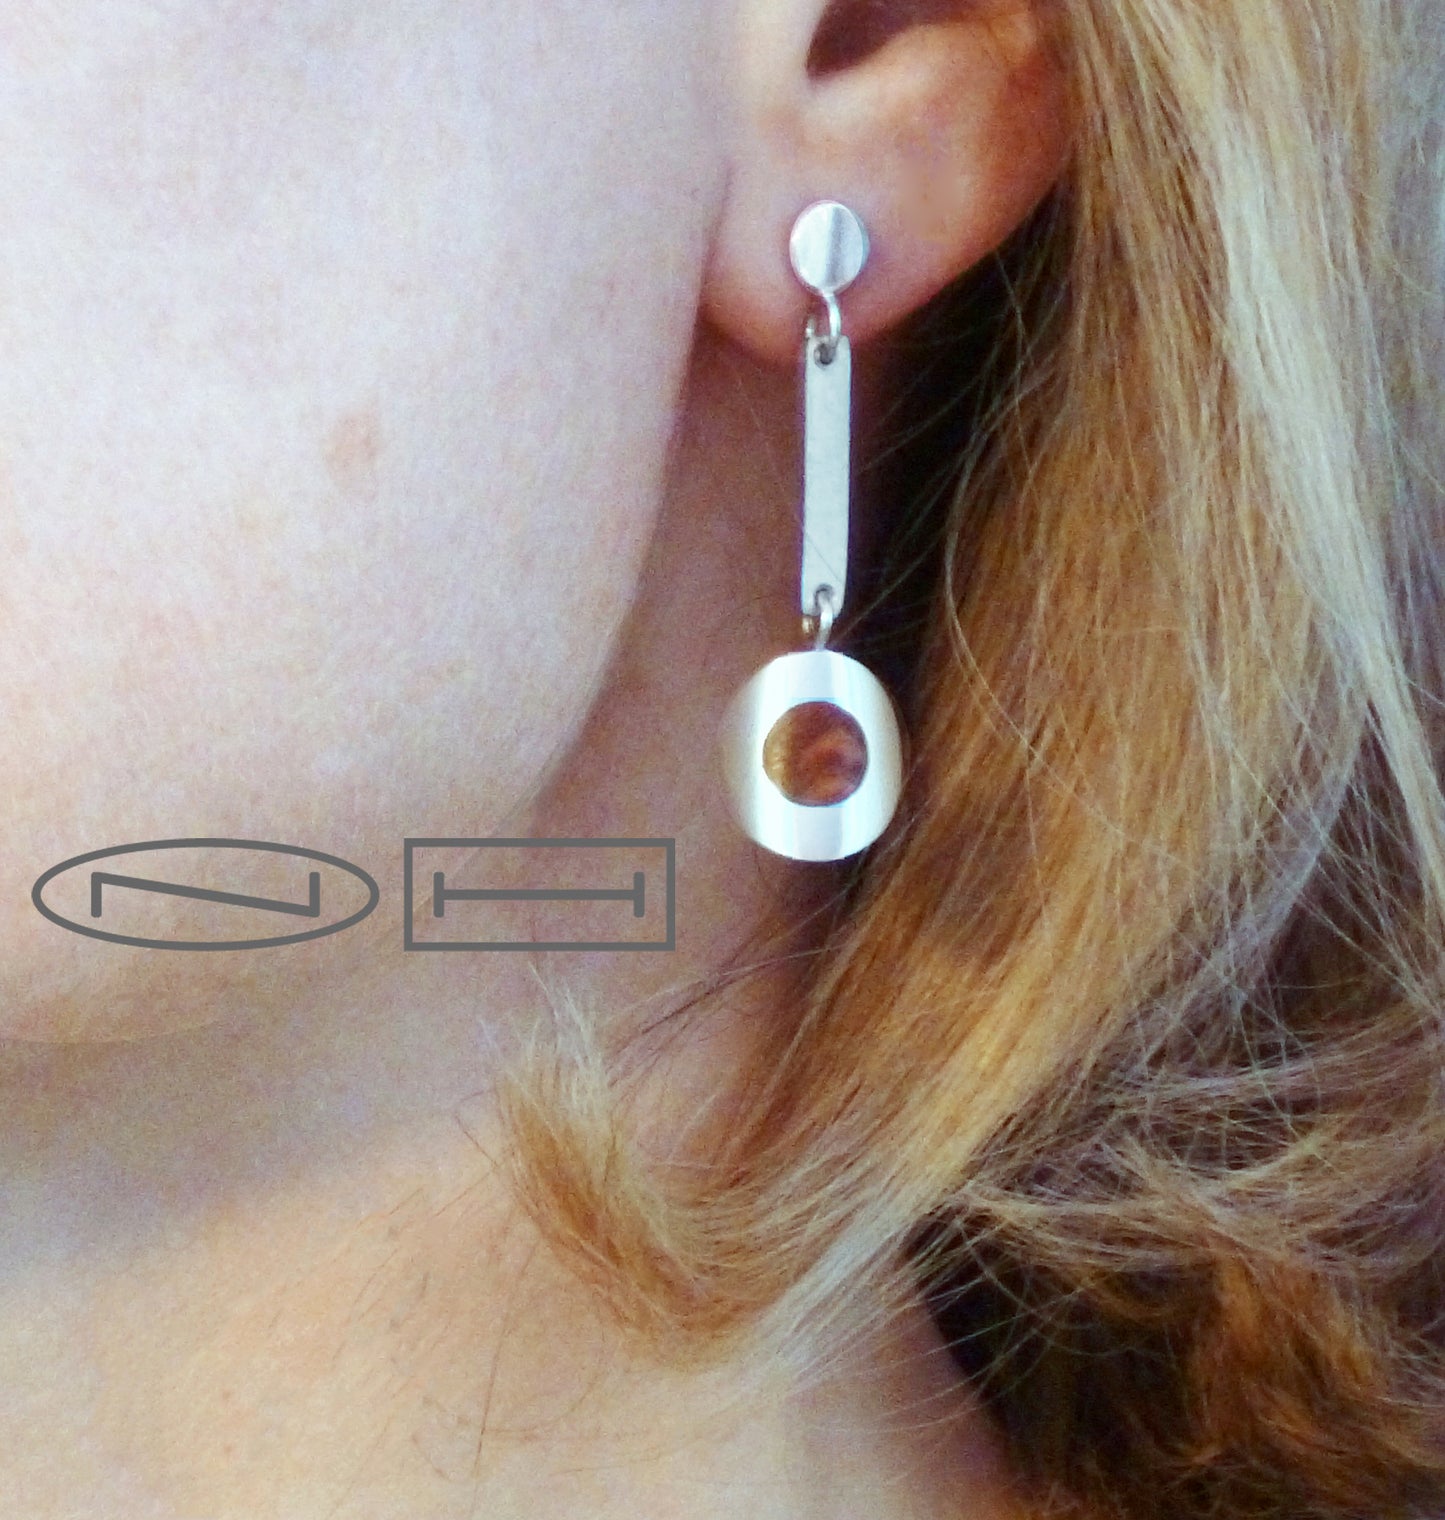 Wood earrings with 100% recycled sterling silver, earrings, by ZEALmetal, Nicole Horlor, in Kingston, ON, Canada